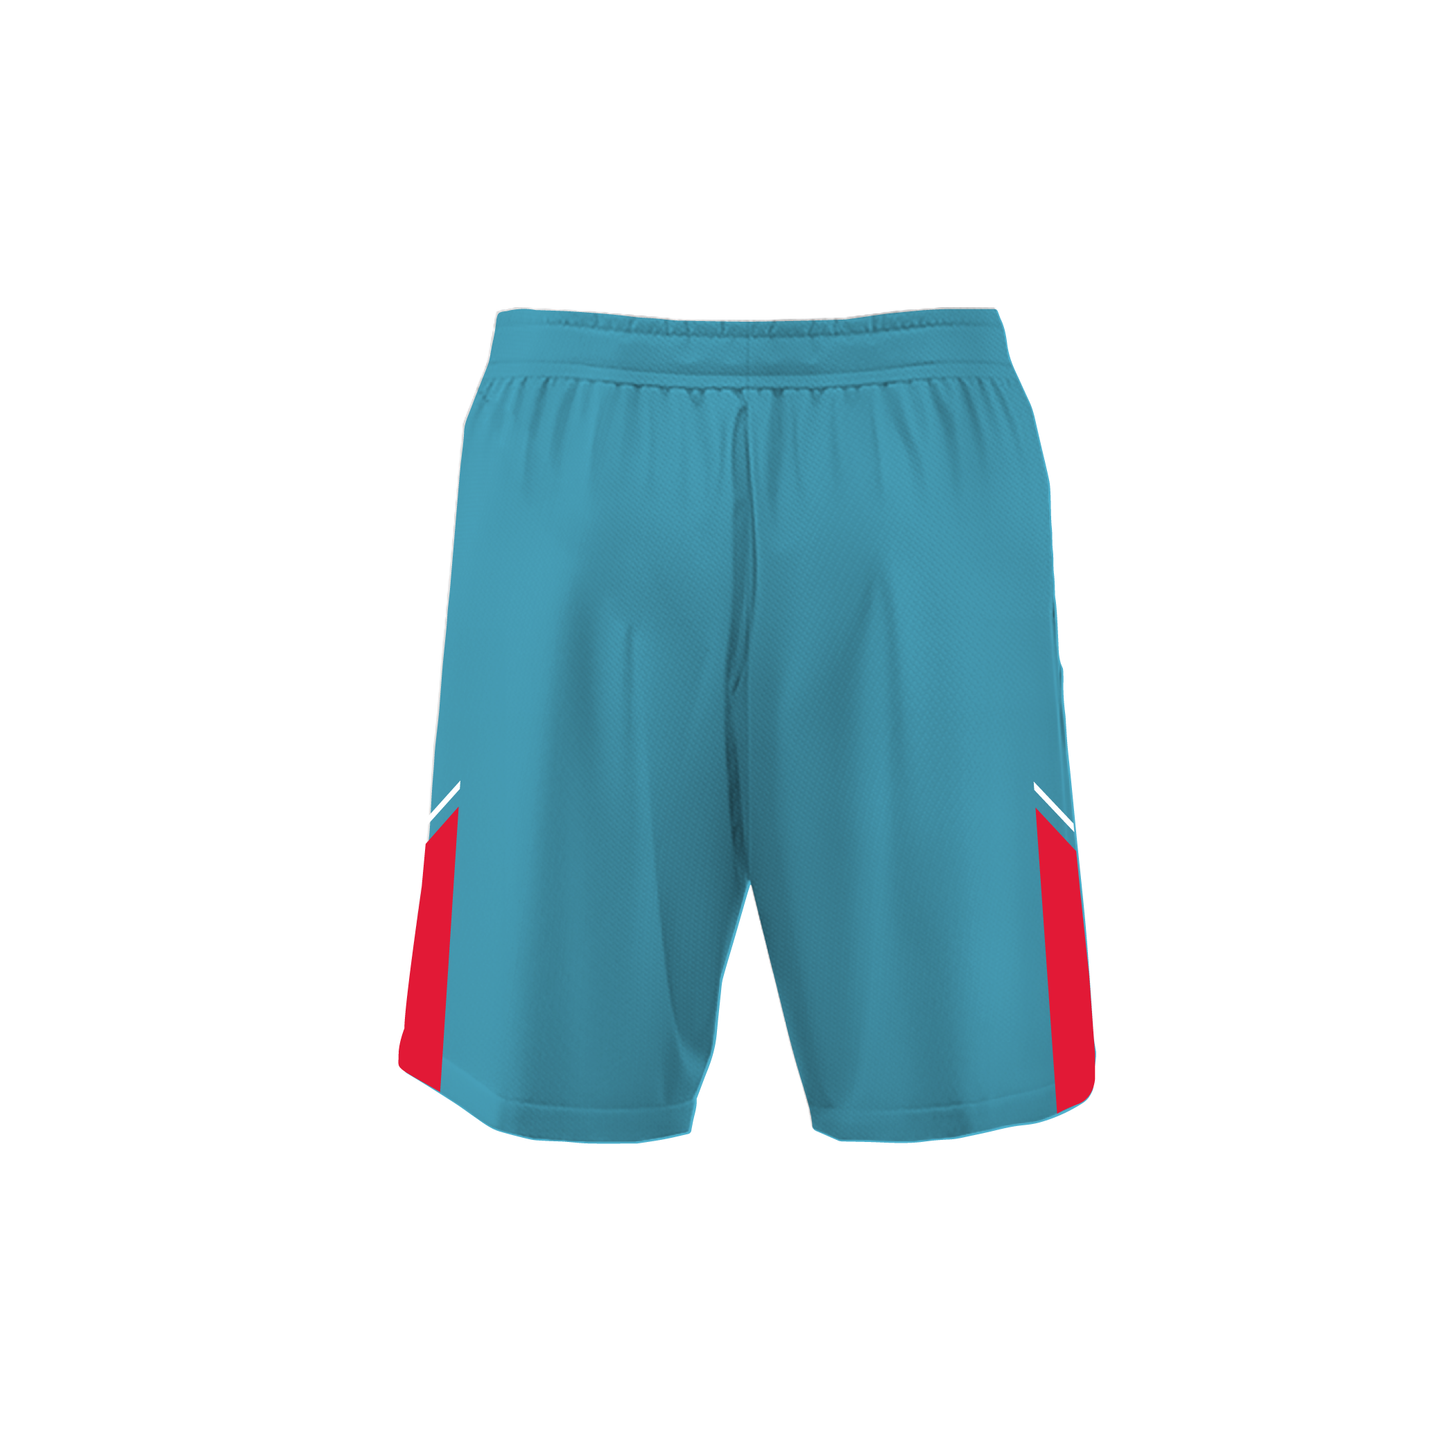 FLA Crabs - CUSTOM Men's Gym Shorts Light Blue